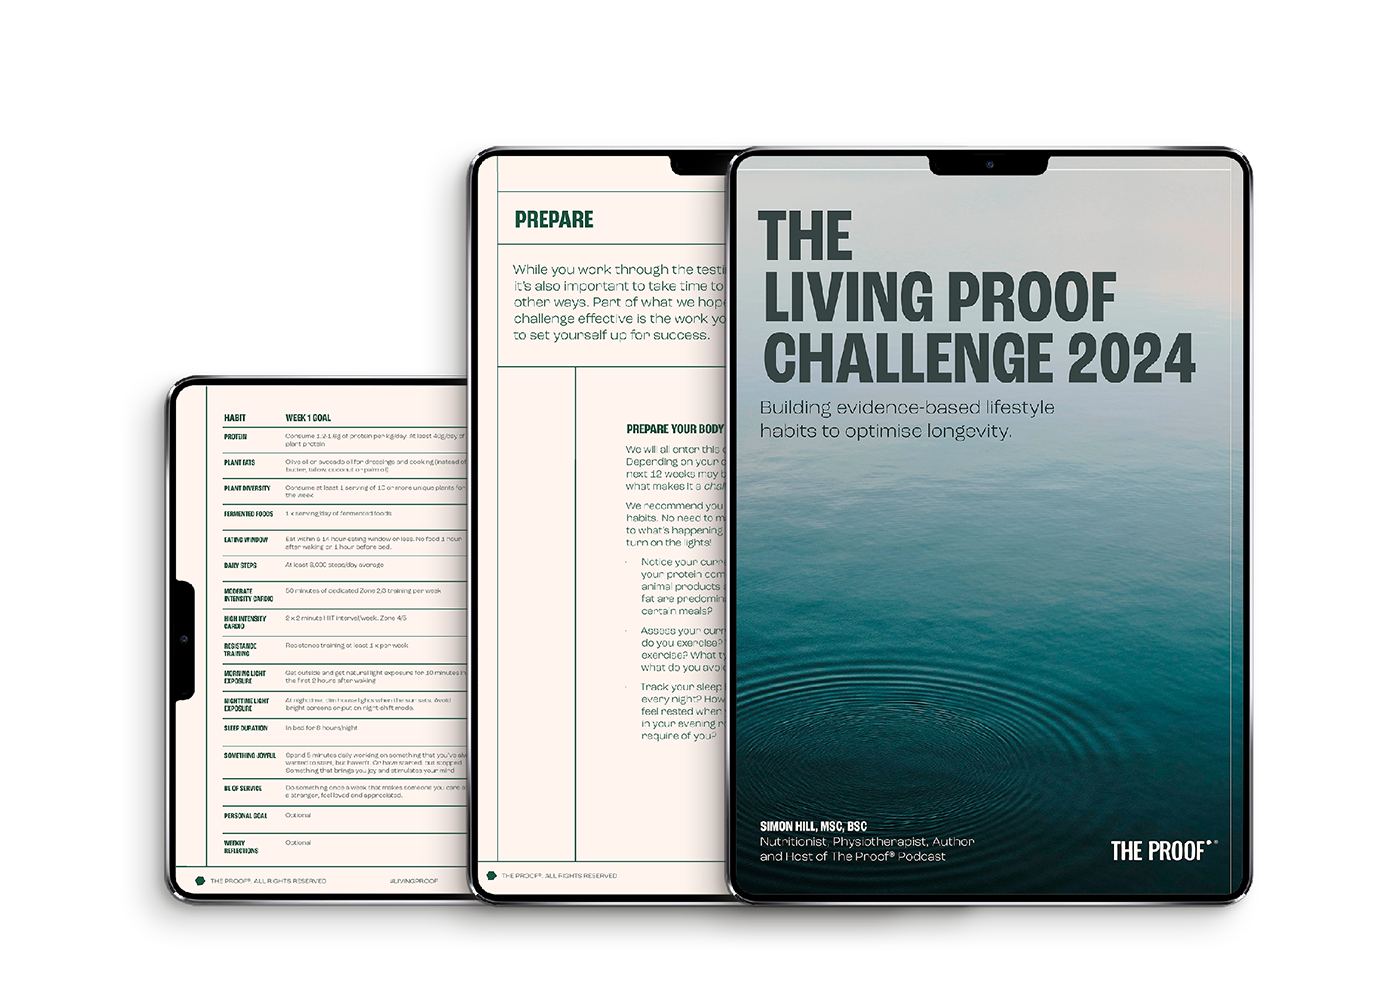 Challenge PDF - The Proof